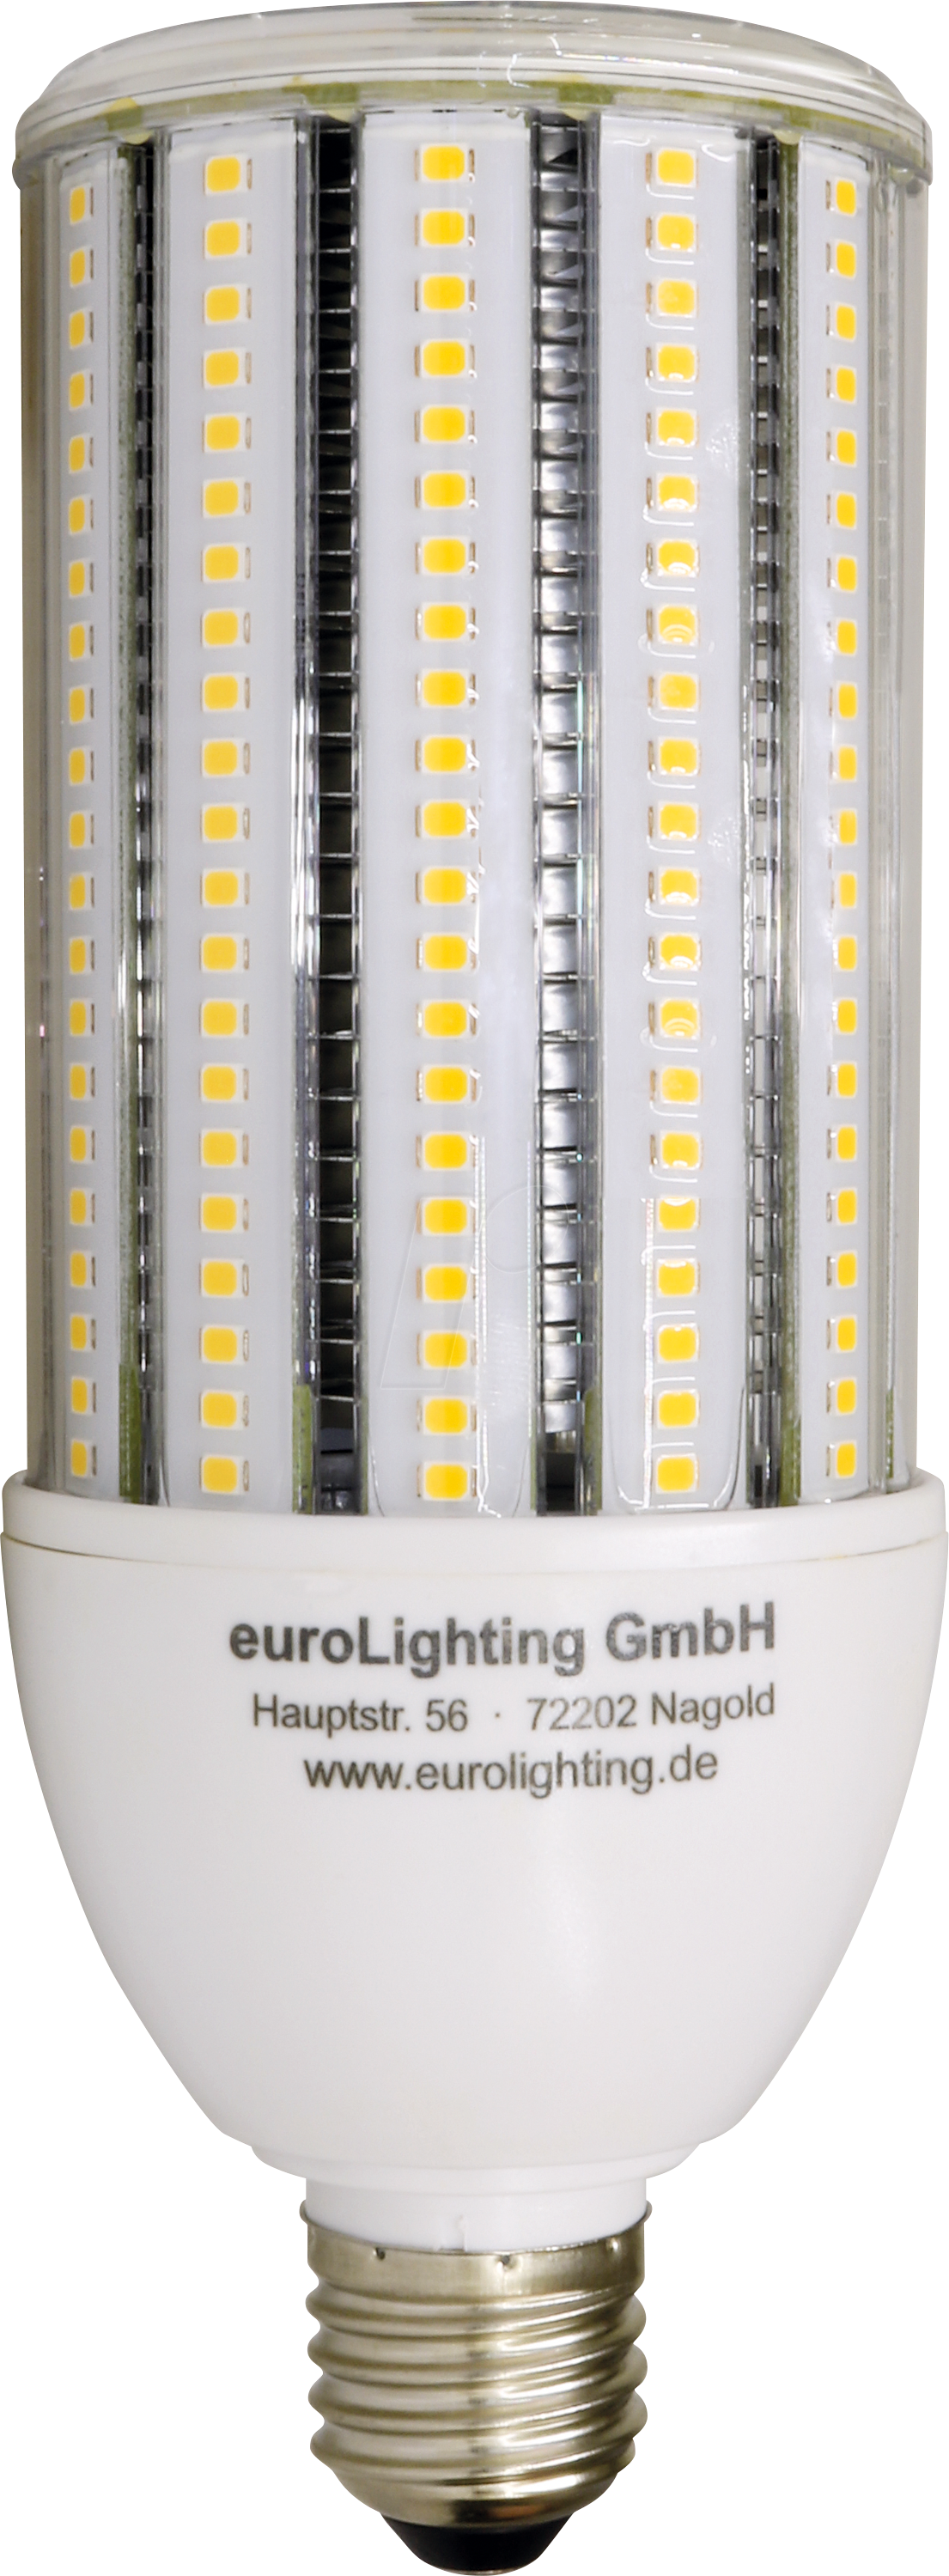 EURL 69DAC00008 - LED-Lampe E27, Cornbulb, 30 W, 3960 lm, 5000 K, dimmbar, ESSB von EUROLIGHTING